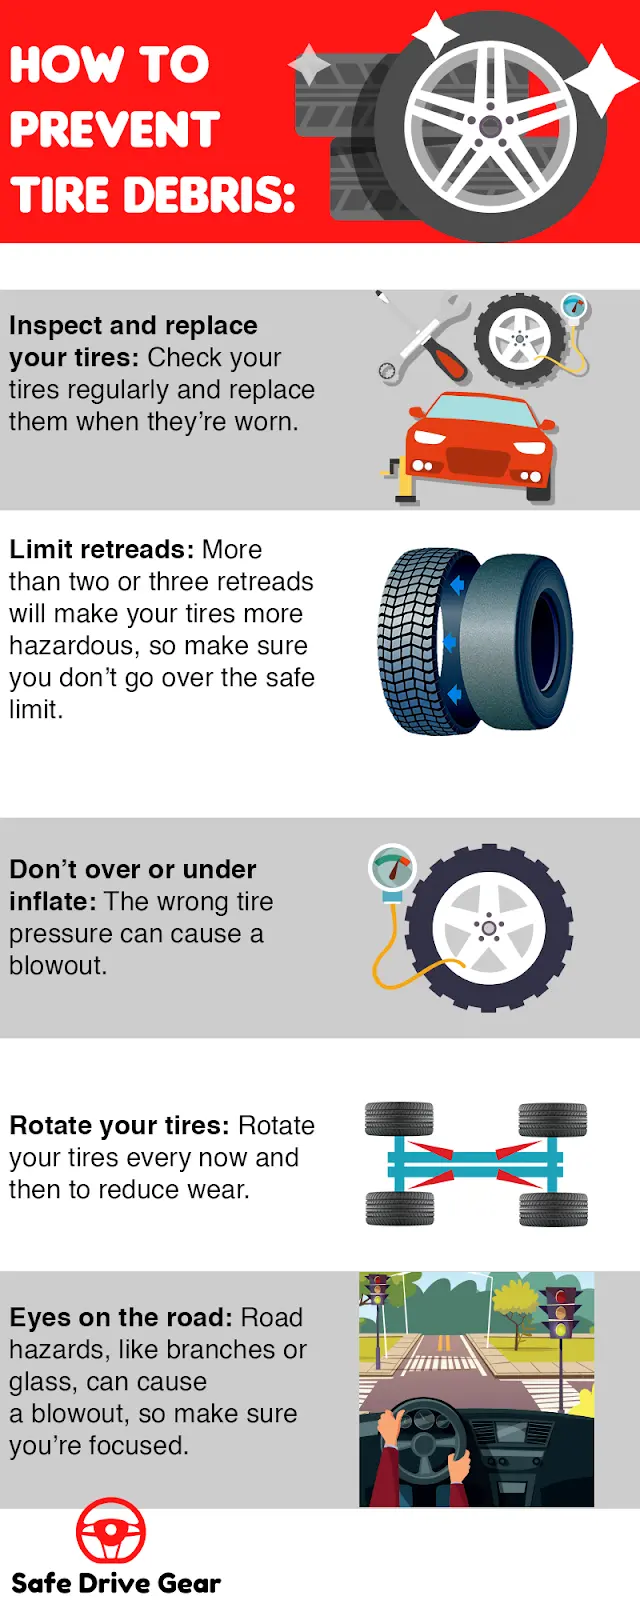 How to Prevent Tire Debris